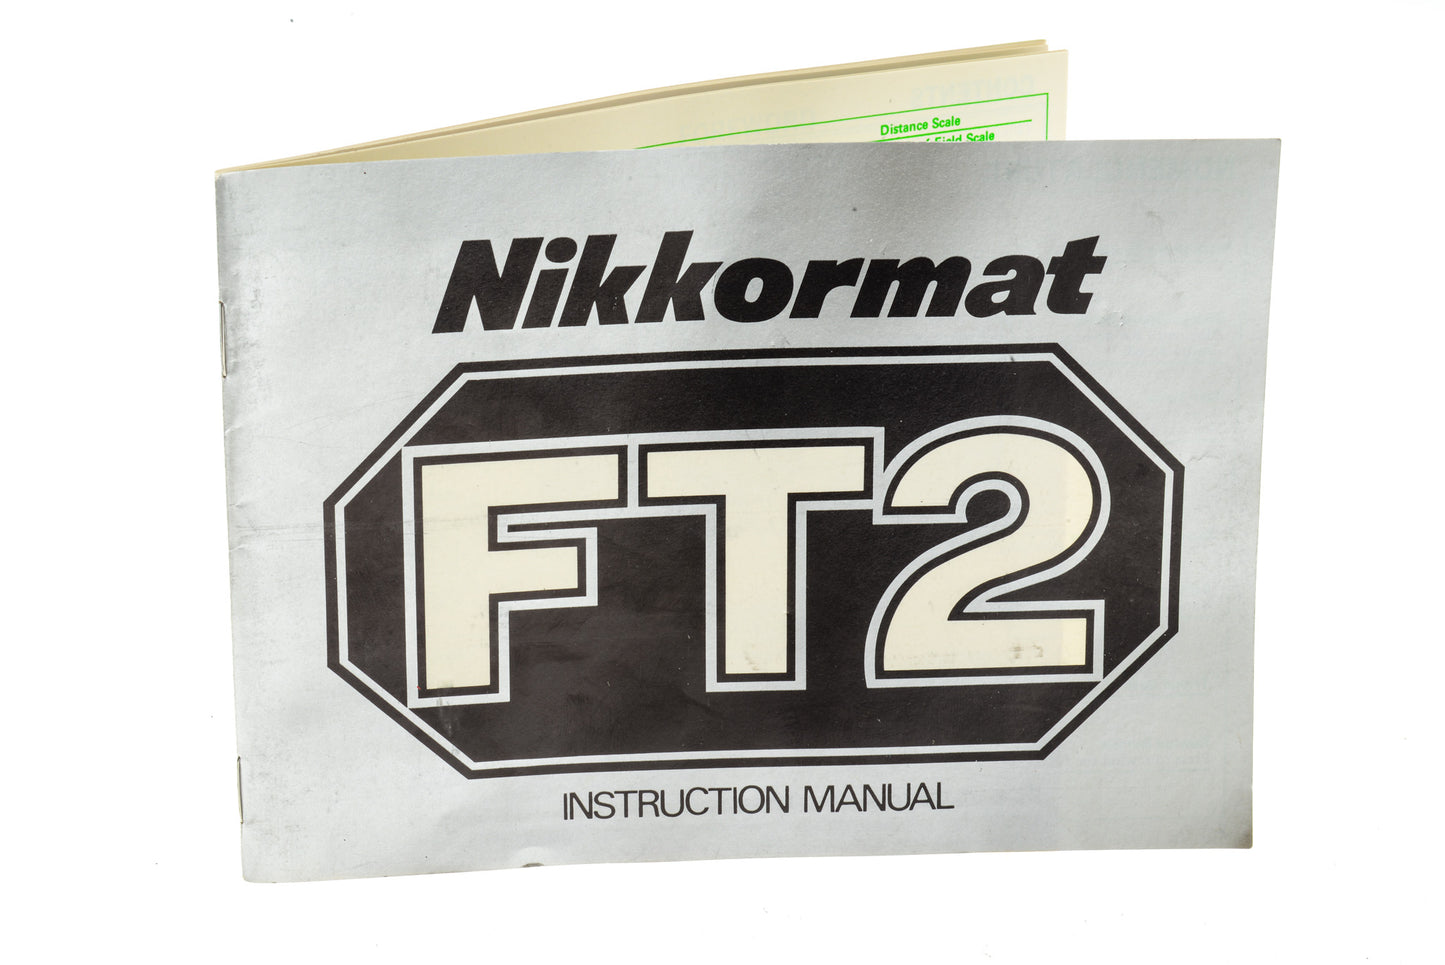 Nikon Nikkormat FT2 Instruction Manual